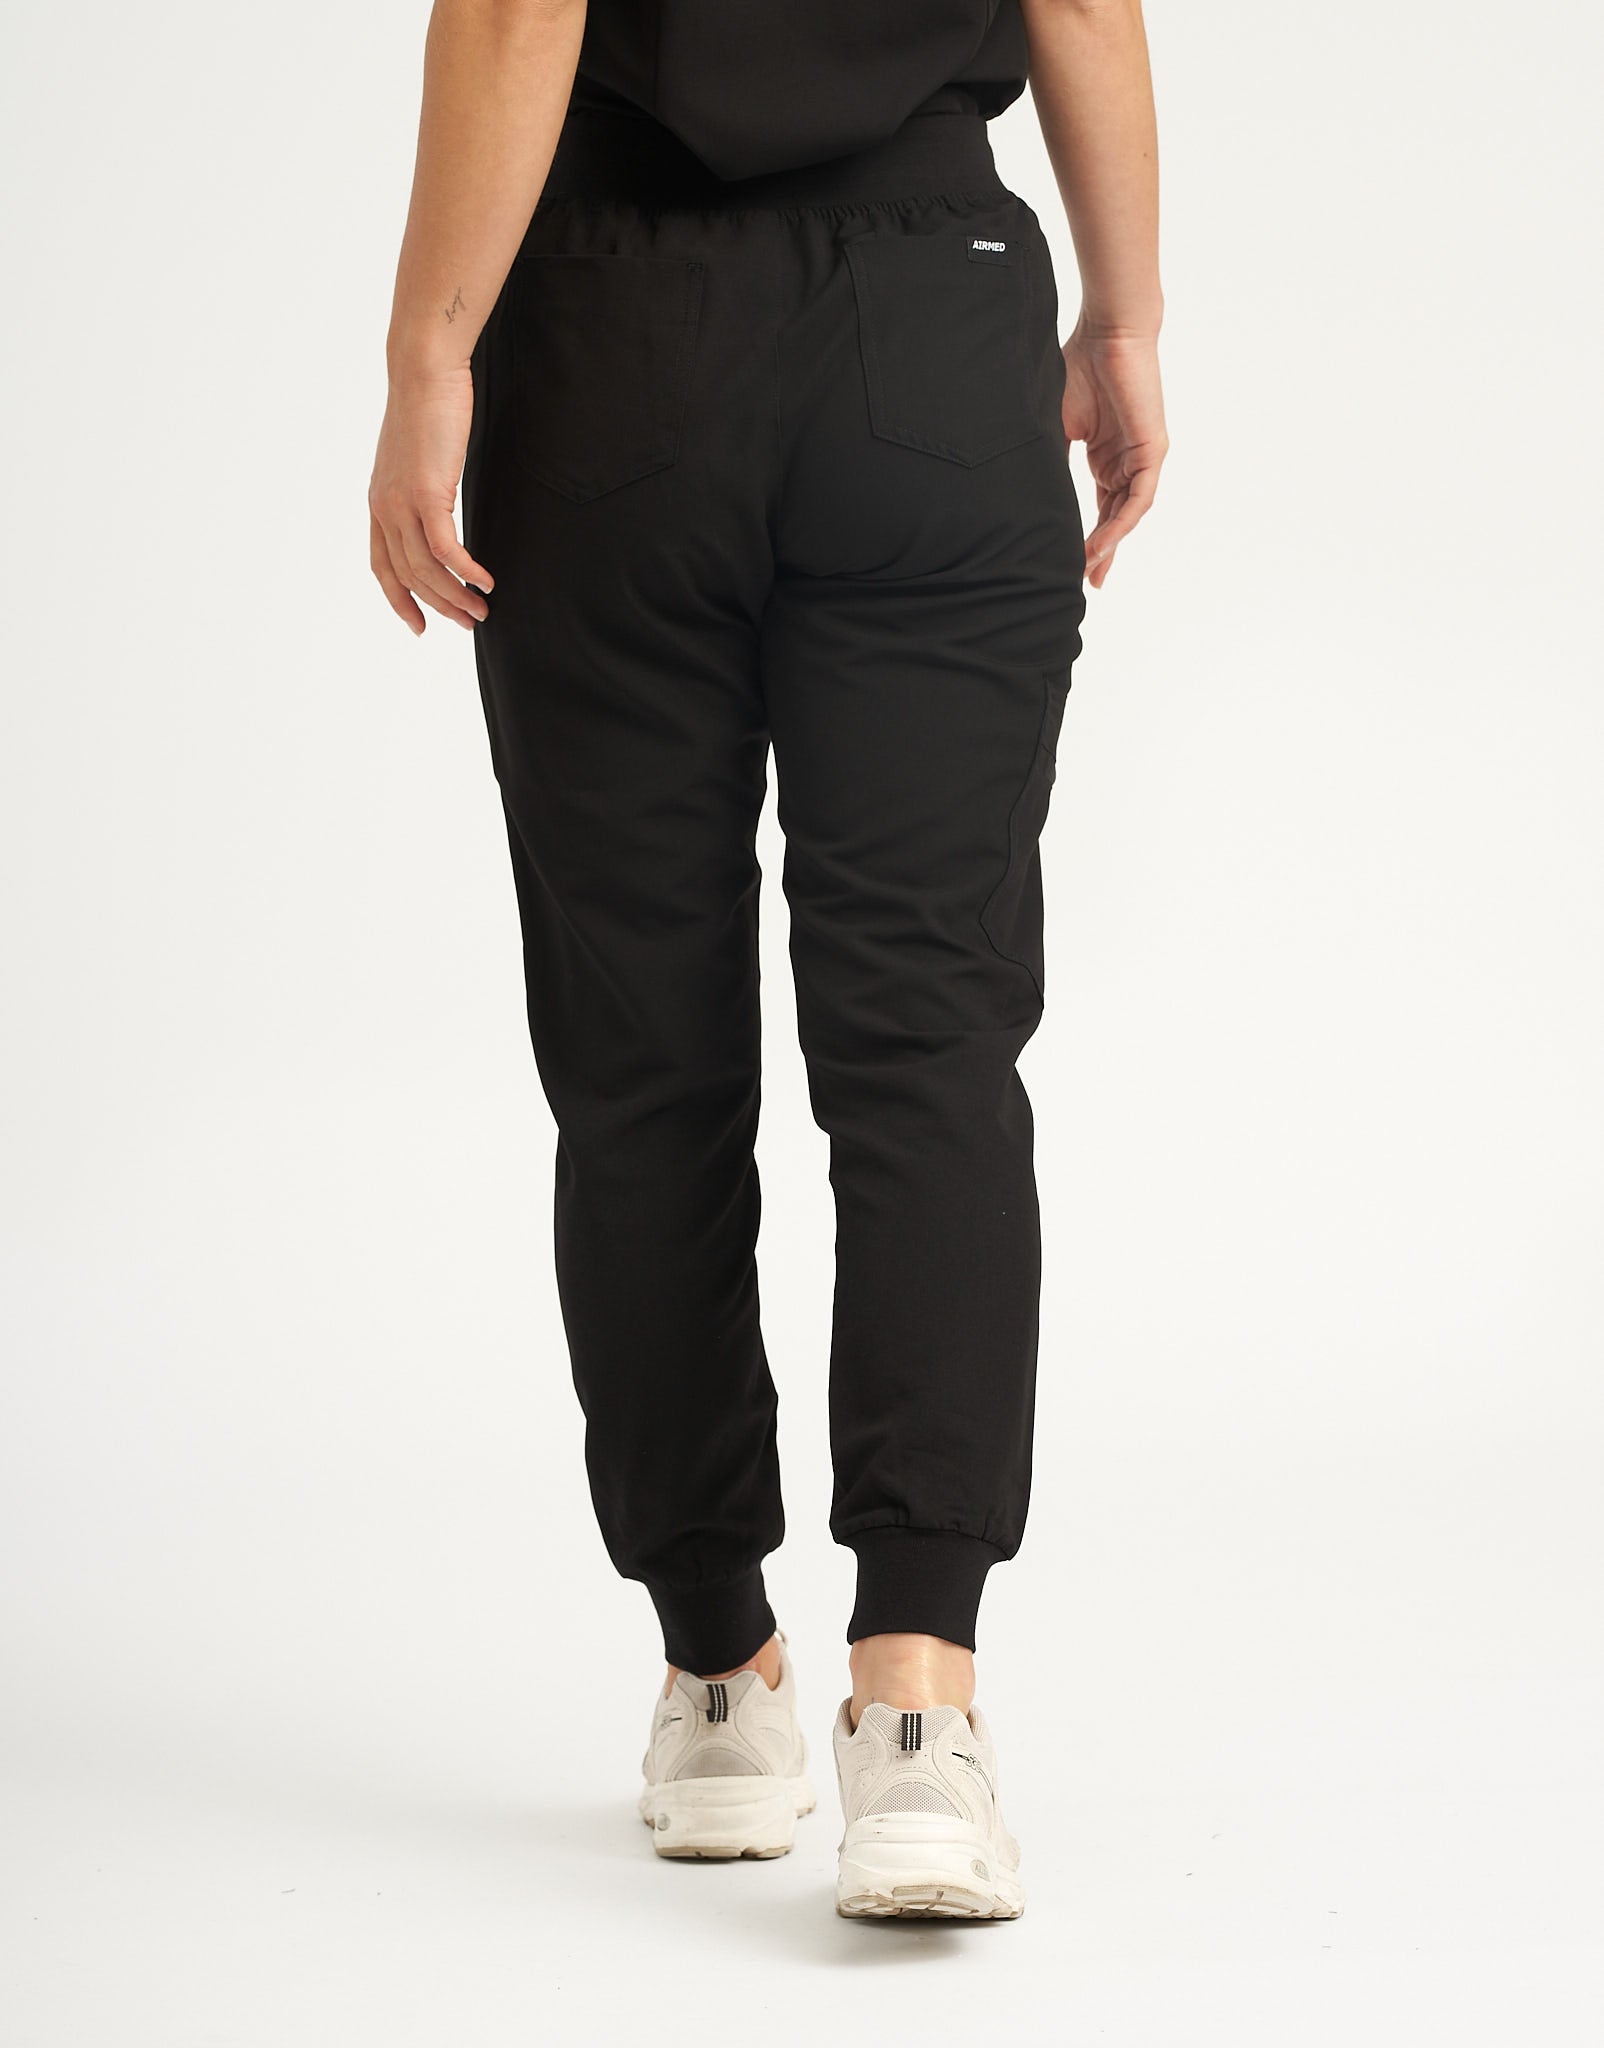 Essential Everyday Black Multi-Pocket Scrub Pants – Airmed Scrubs